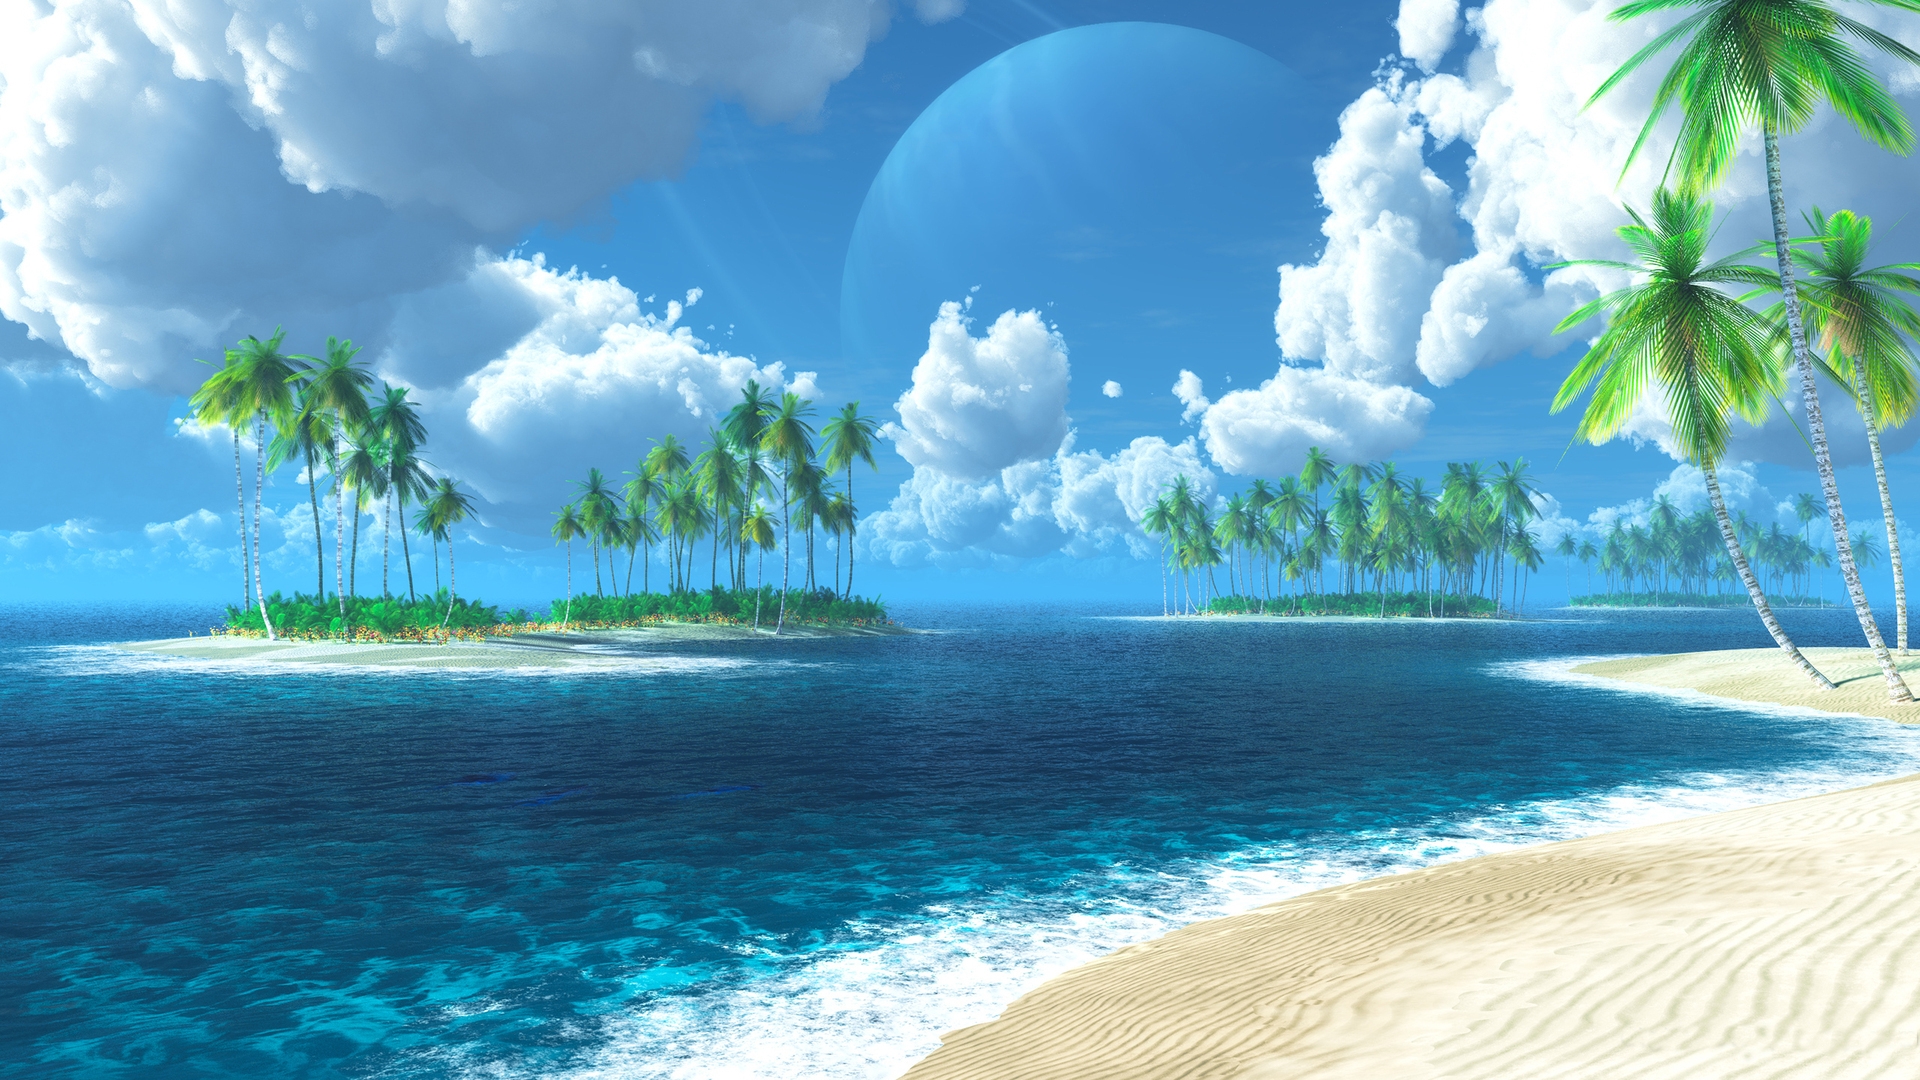 Exotic Ocean Island for 1920 x 1080 HDTV 1080p resolution